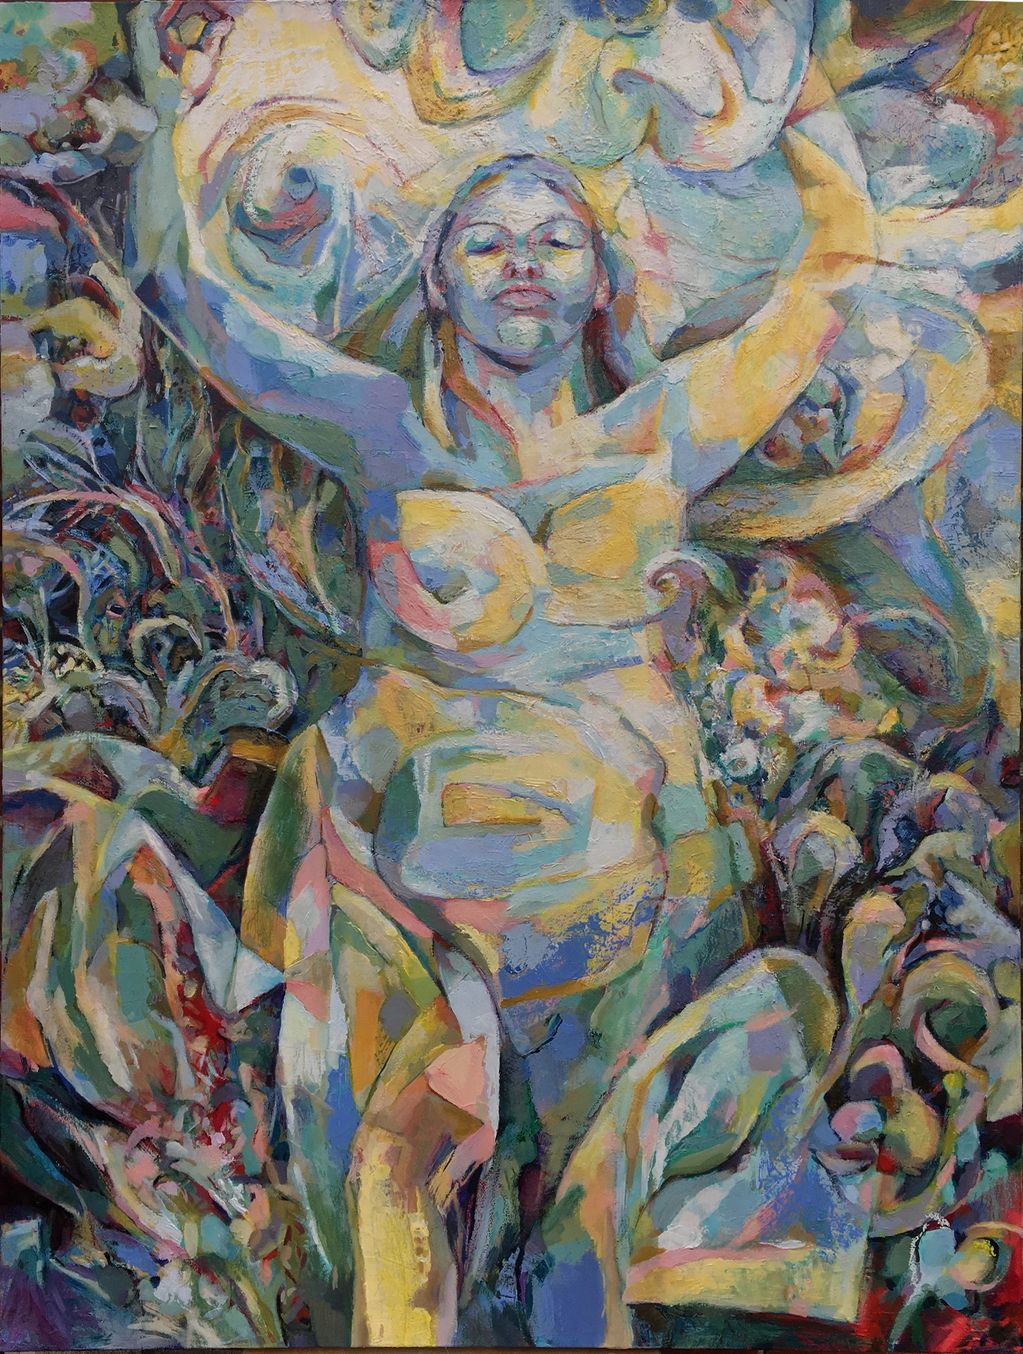 'Sophia/Wisdom' 
Oil on canvas, 48 in  x 36 in 2021